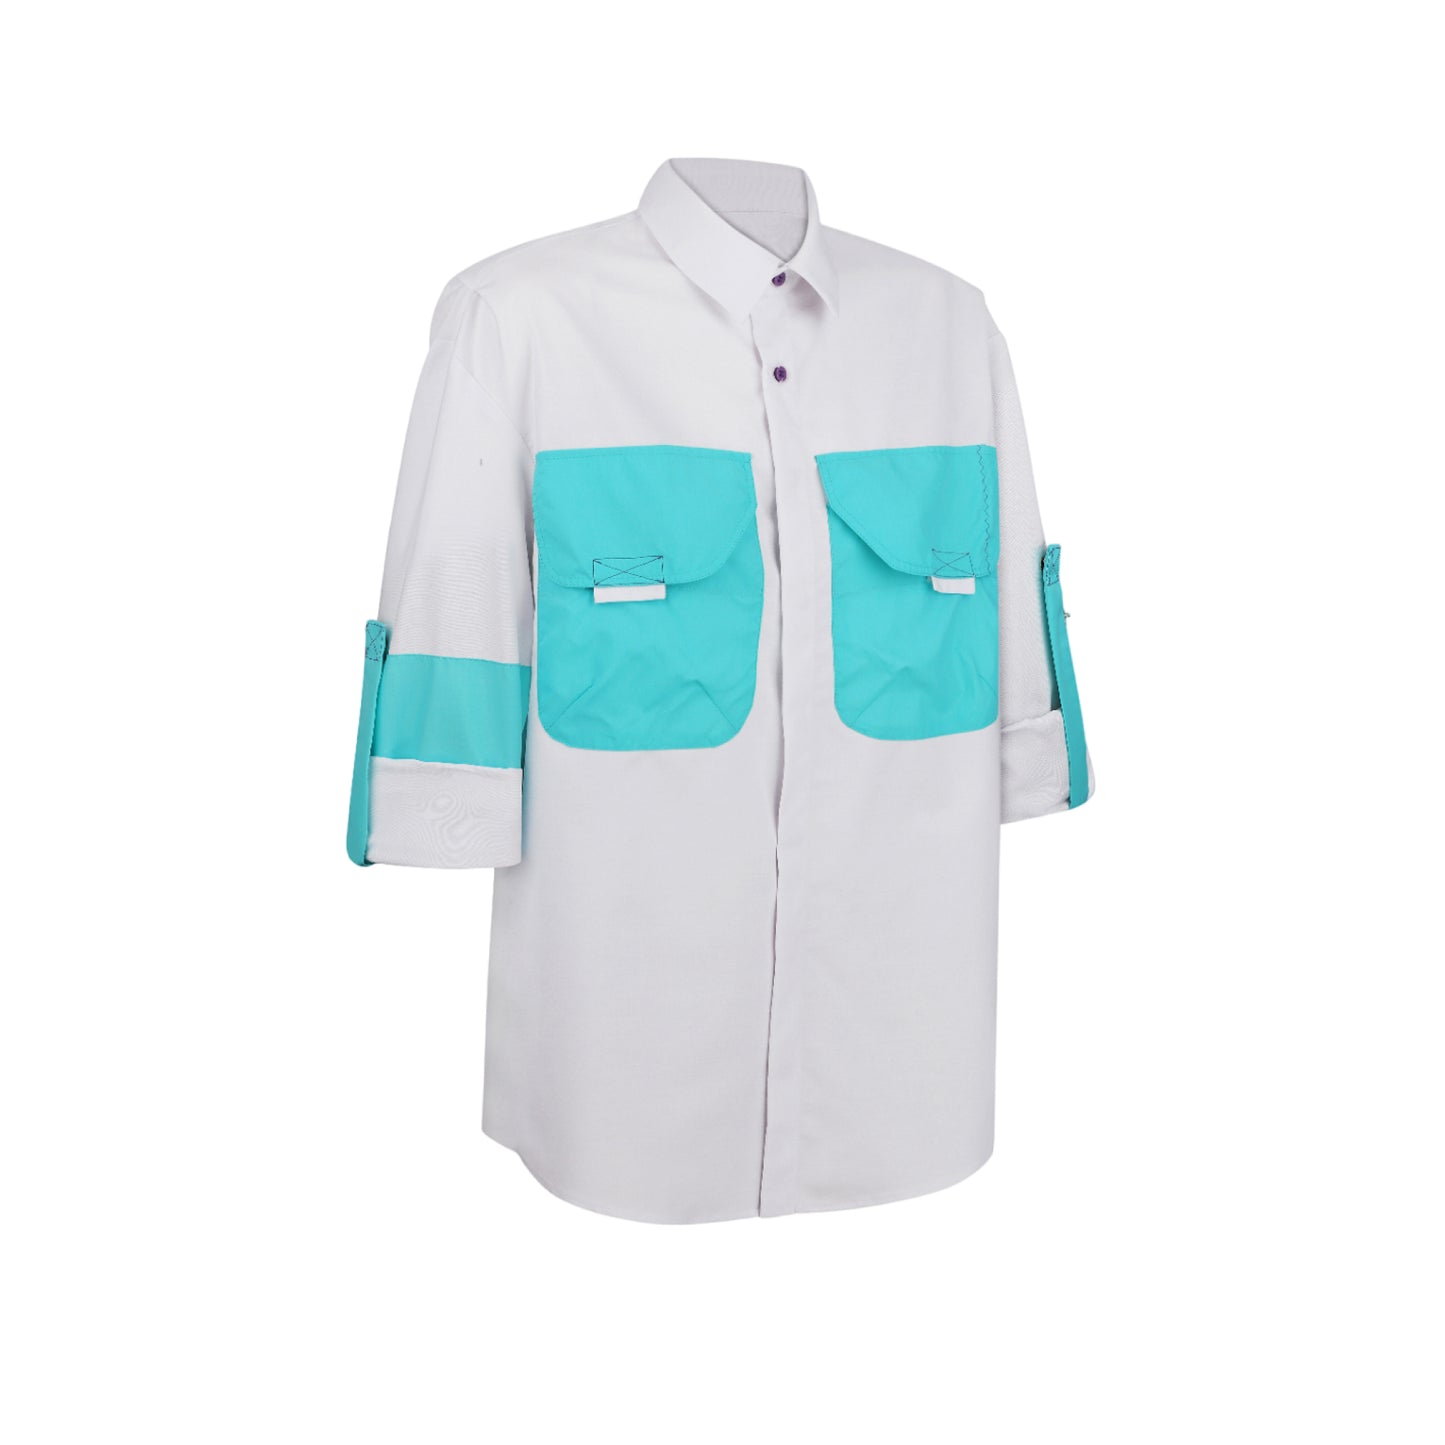 Long & short sleeves stylish cargo shirt with double pocket & collar